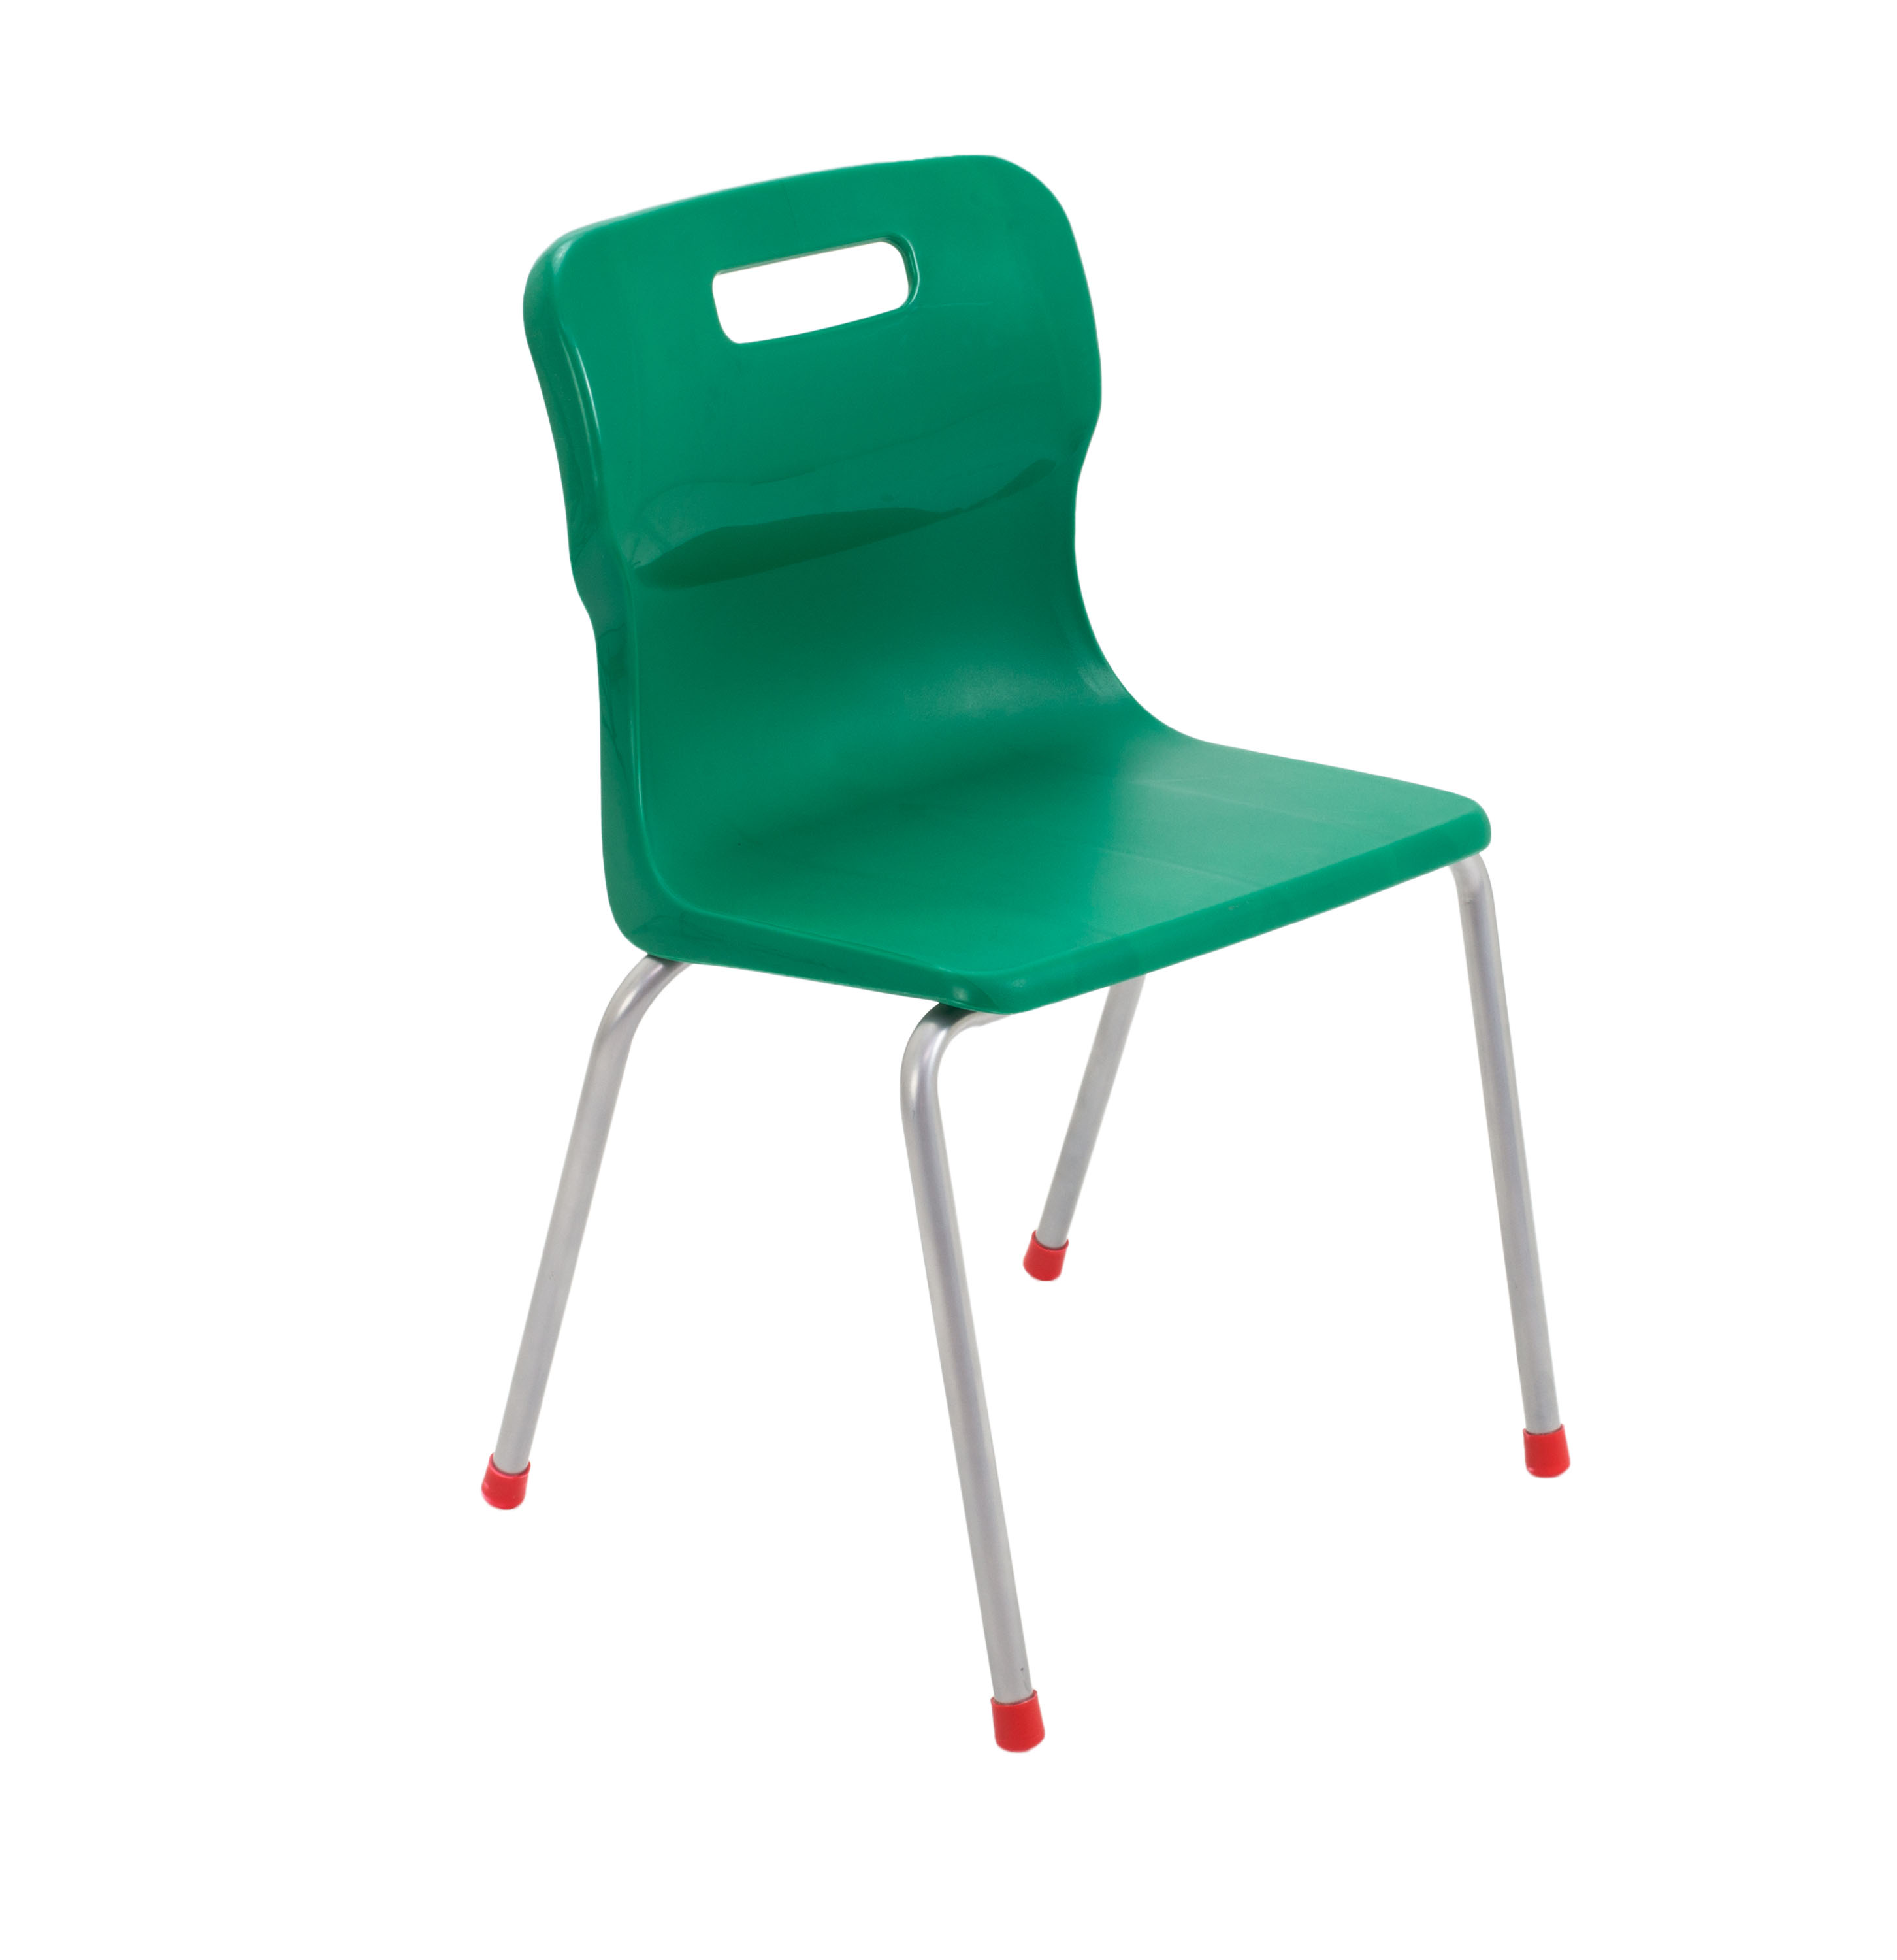 Titan 4 Leg Chair Size 4 - 380mm Seat Height - Green